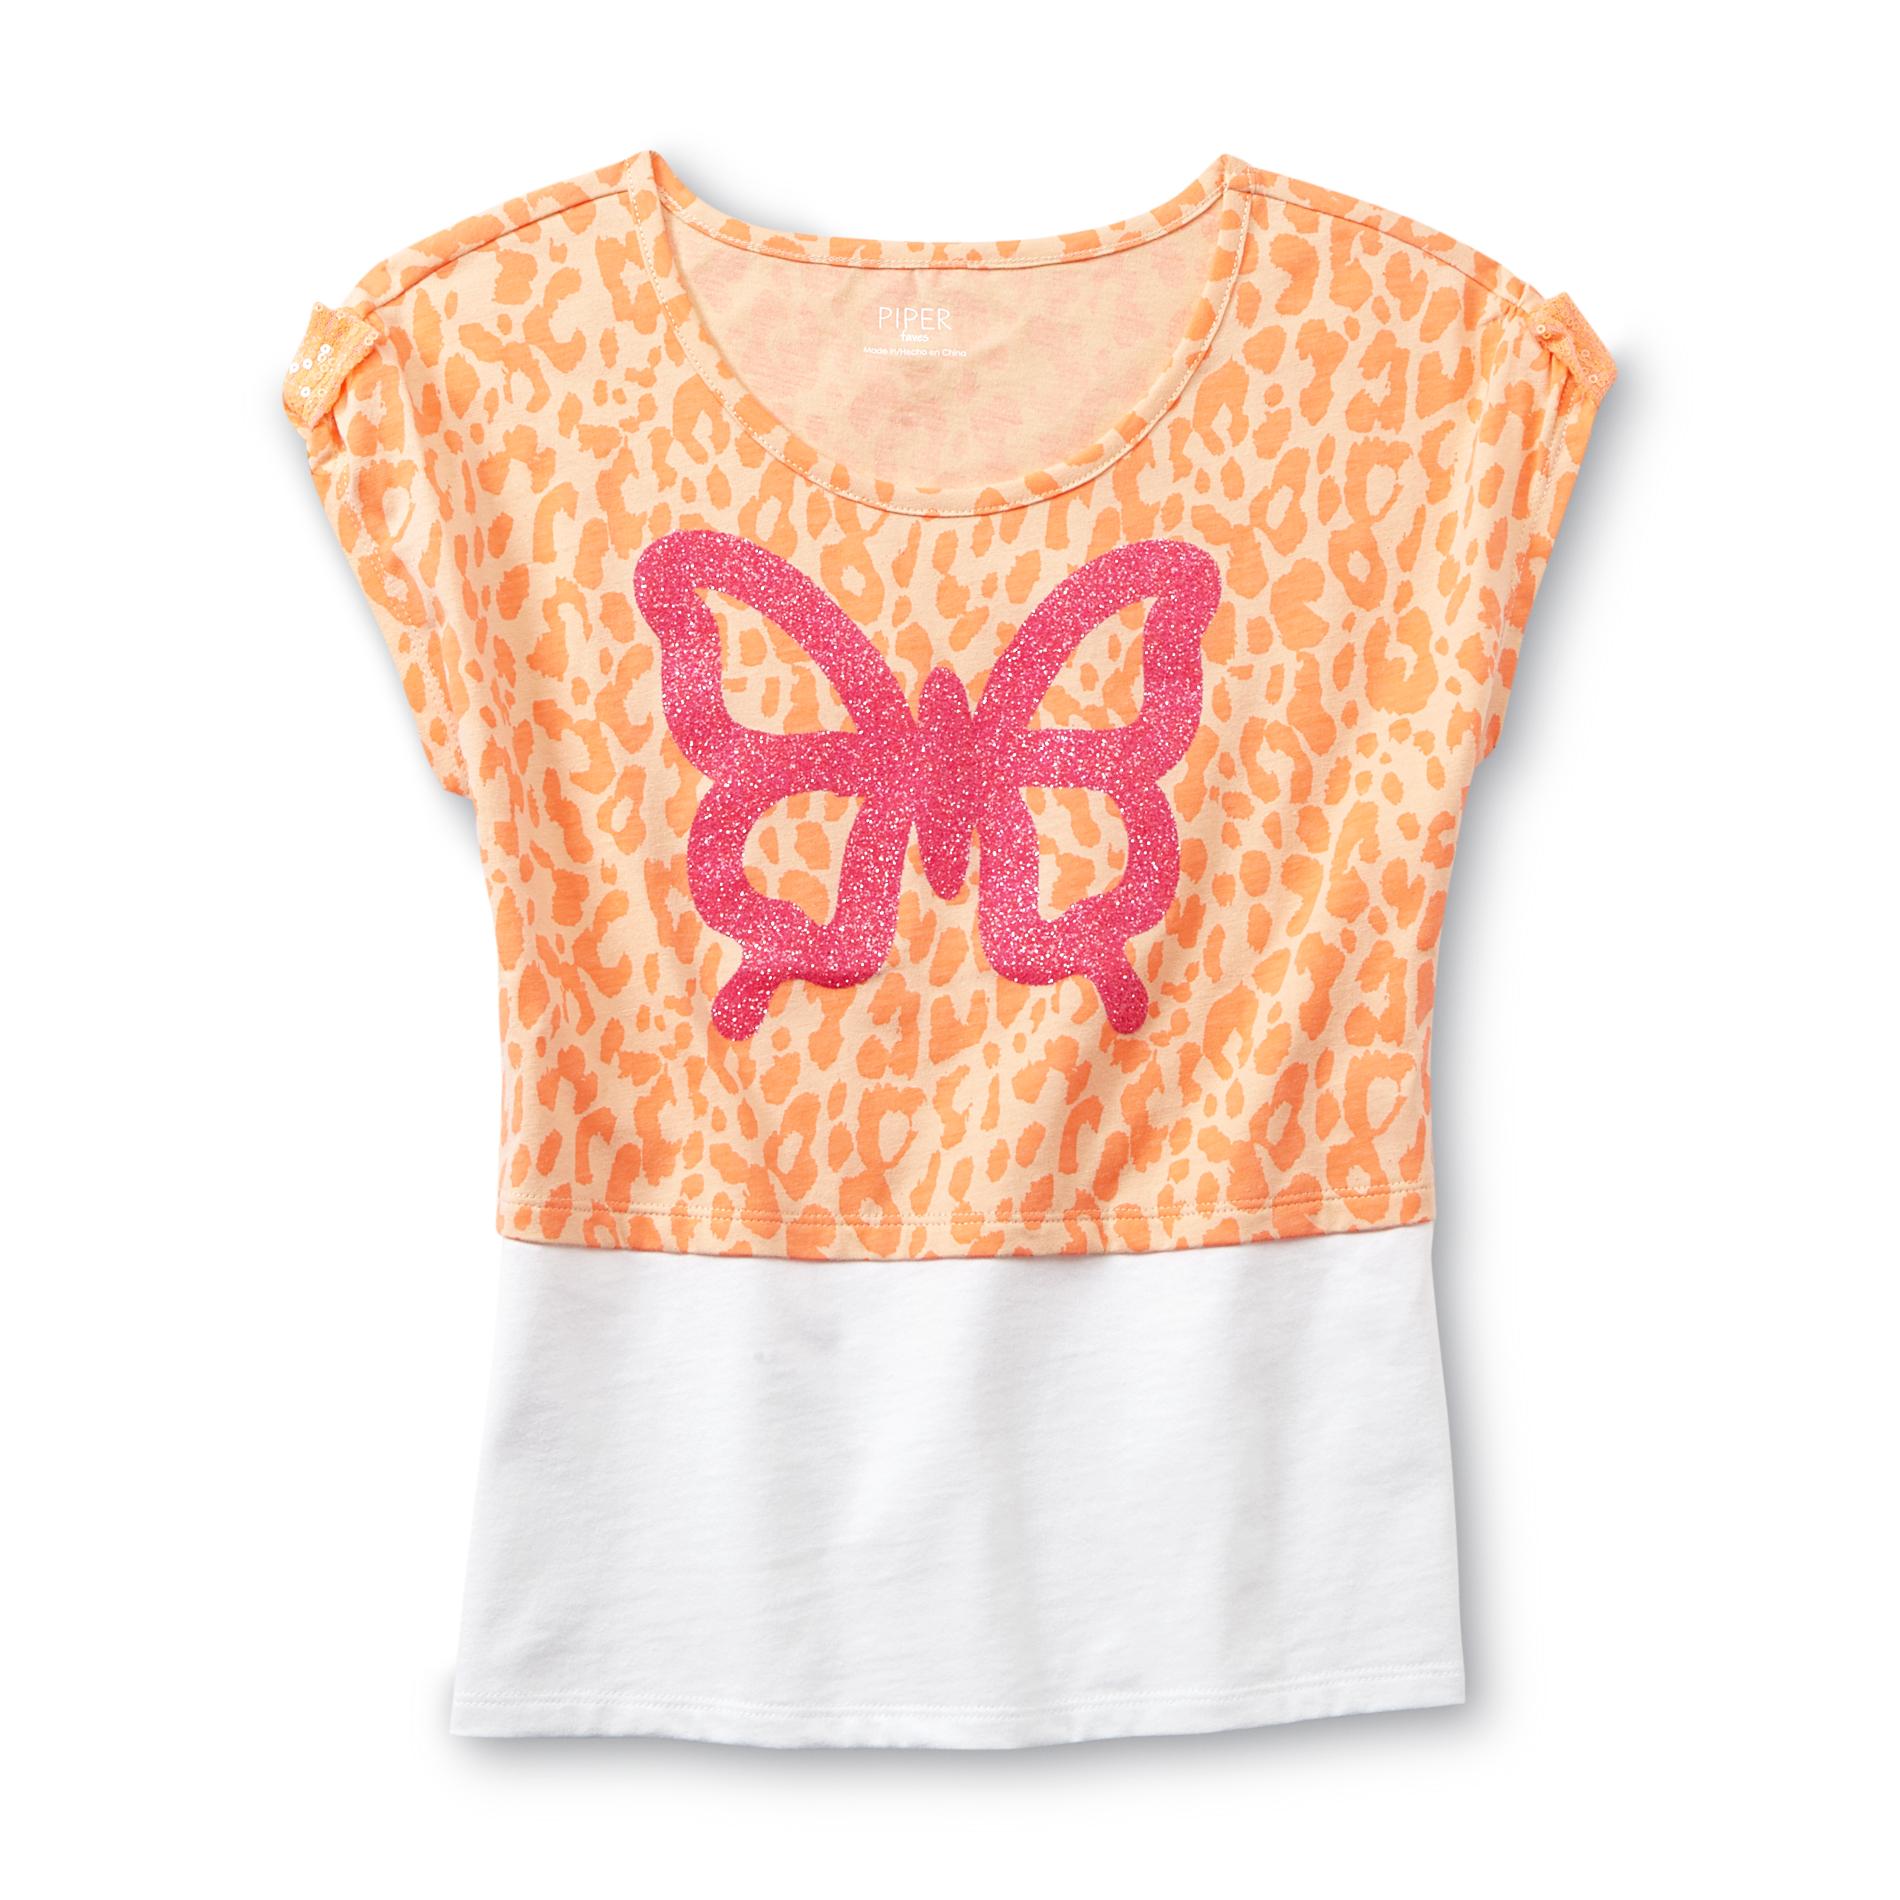 Piper Girl's Top - Leopard Print & Glitter Butterfly